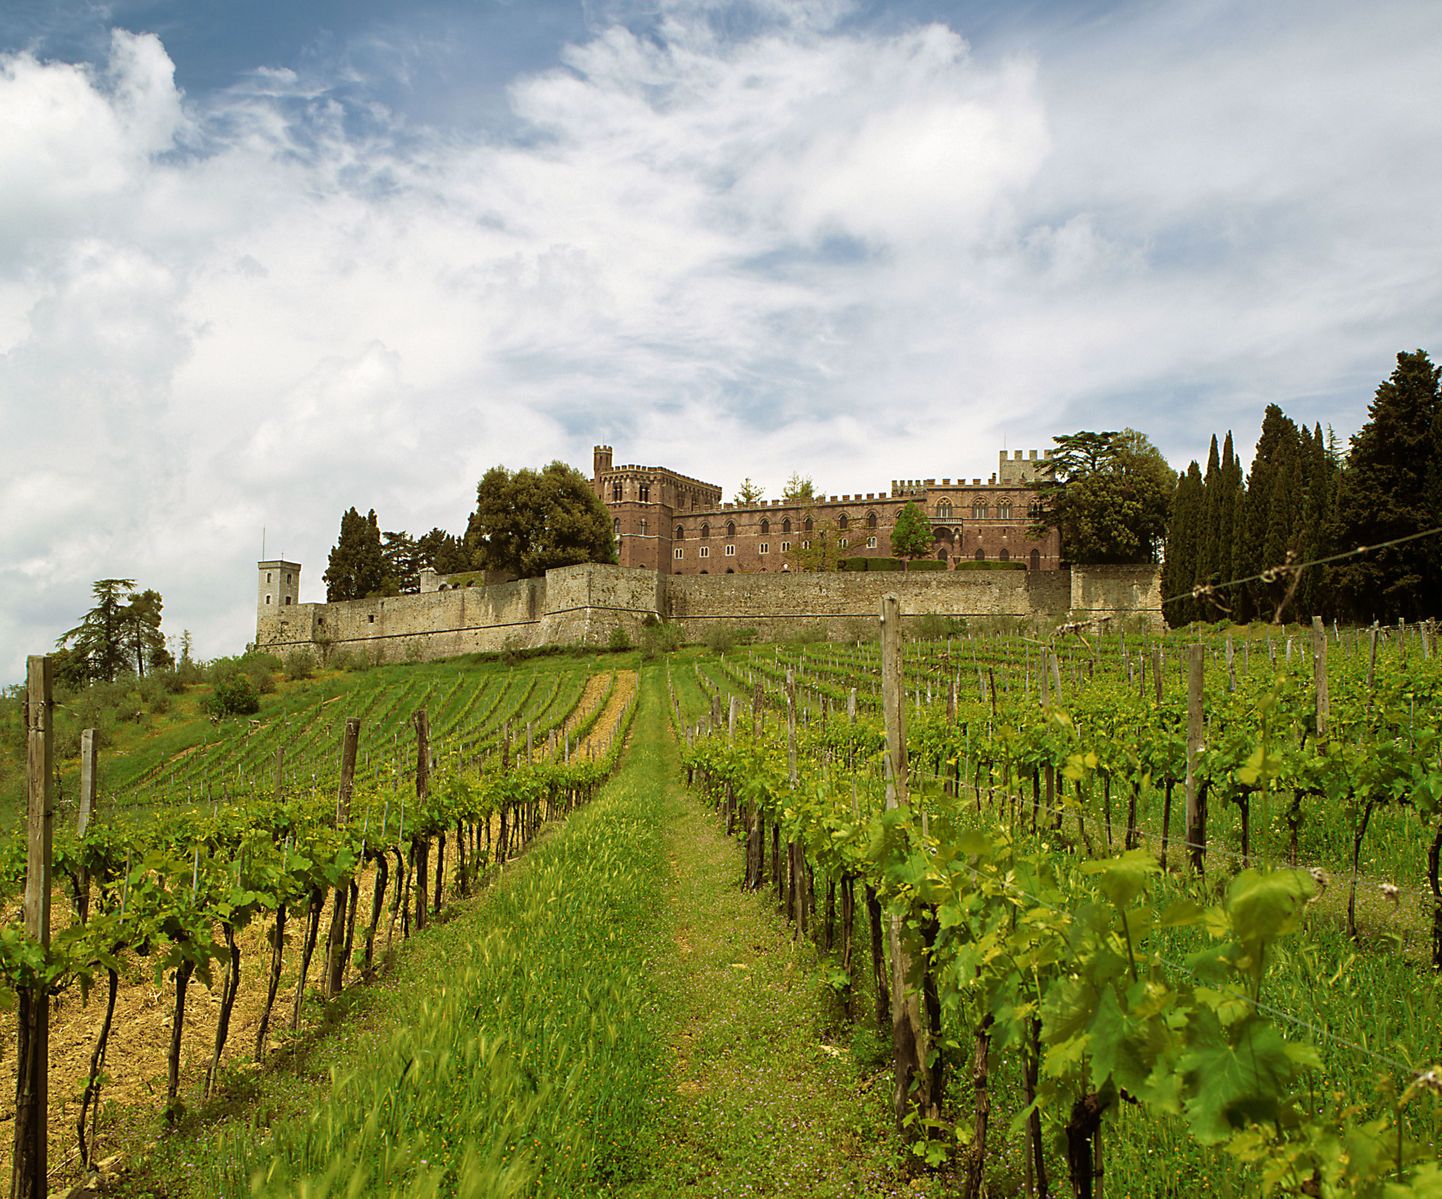 Idülliline Toscana on Chianti Classico kodupaik.